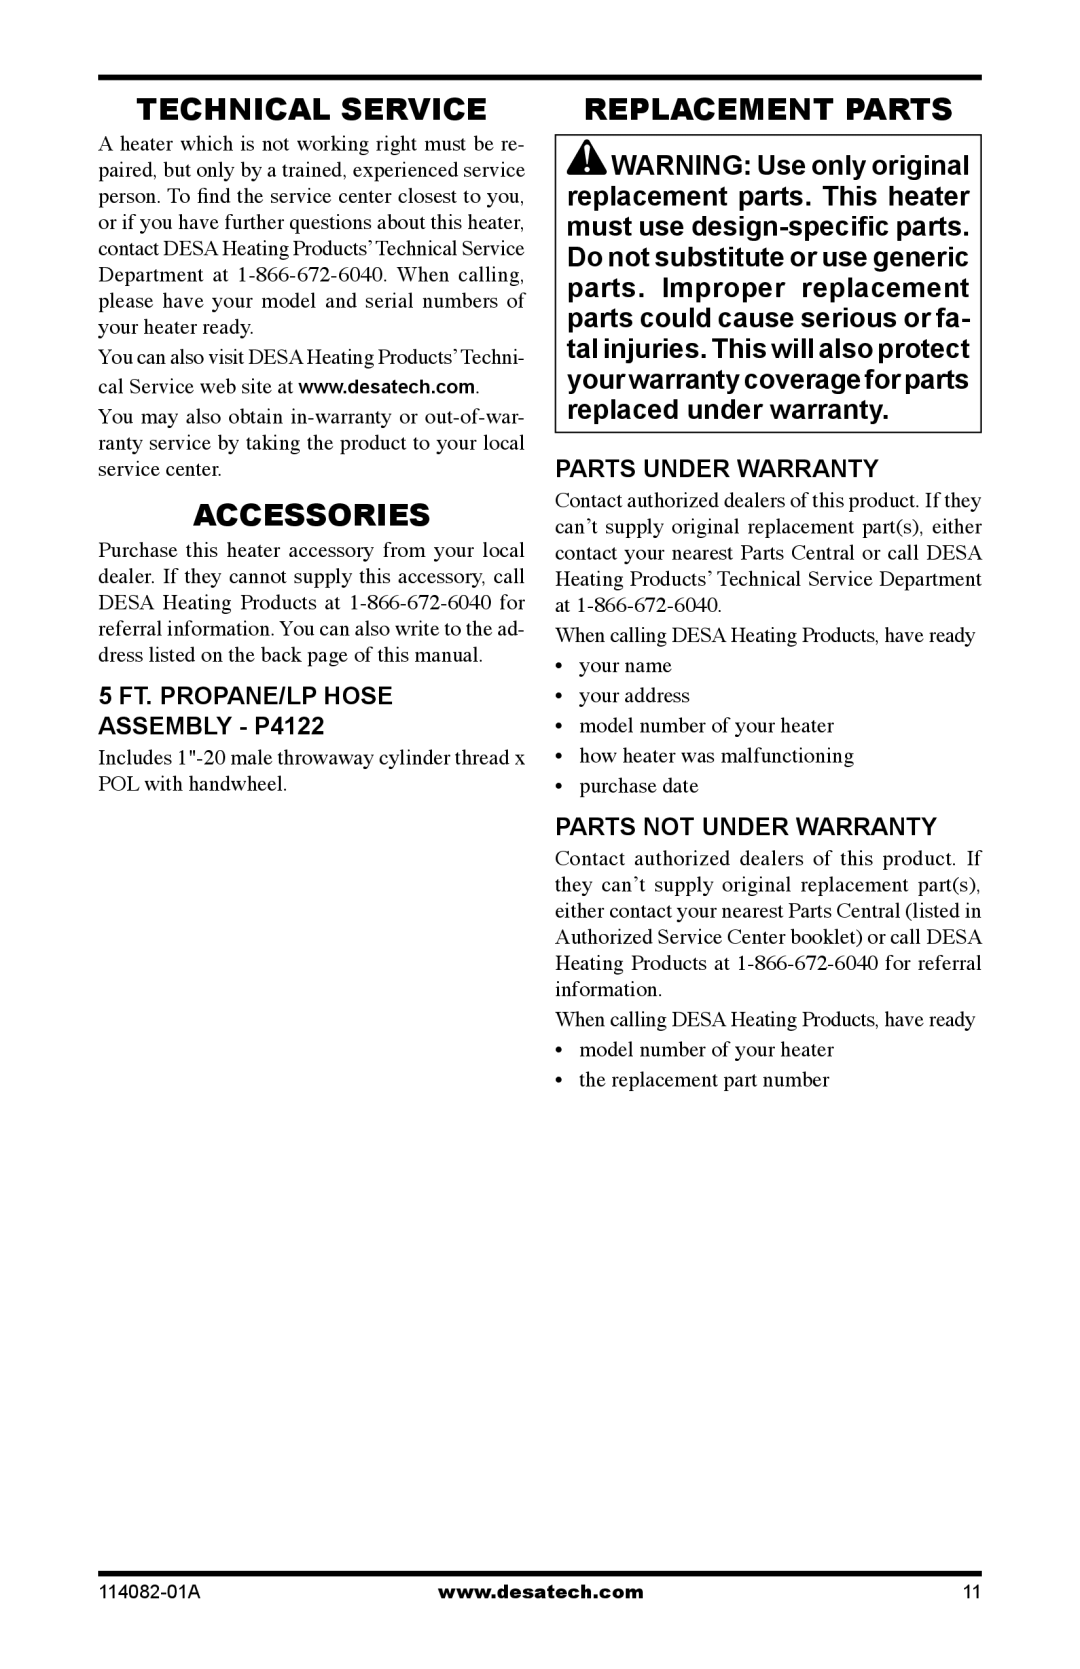 Desa SPC-21PHTSA owner manual Technical Service, Accessories, Replacement Parts, 5 FT. PROPANE/LP HOSE ASSEMBLY - P4122 